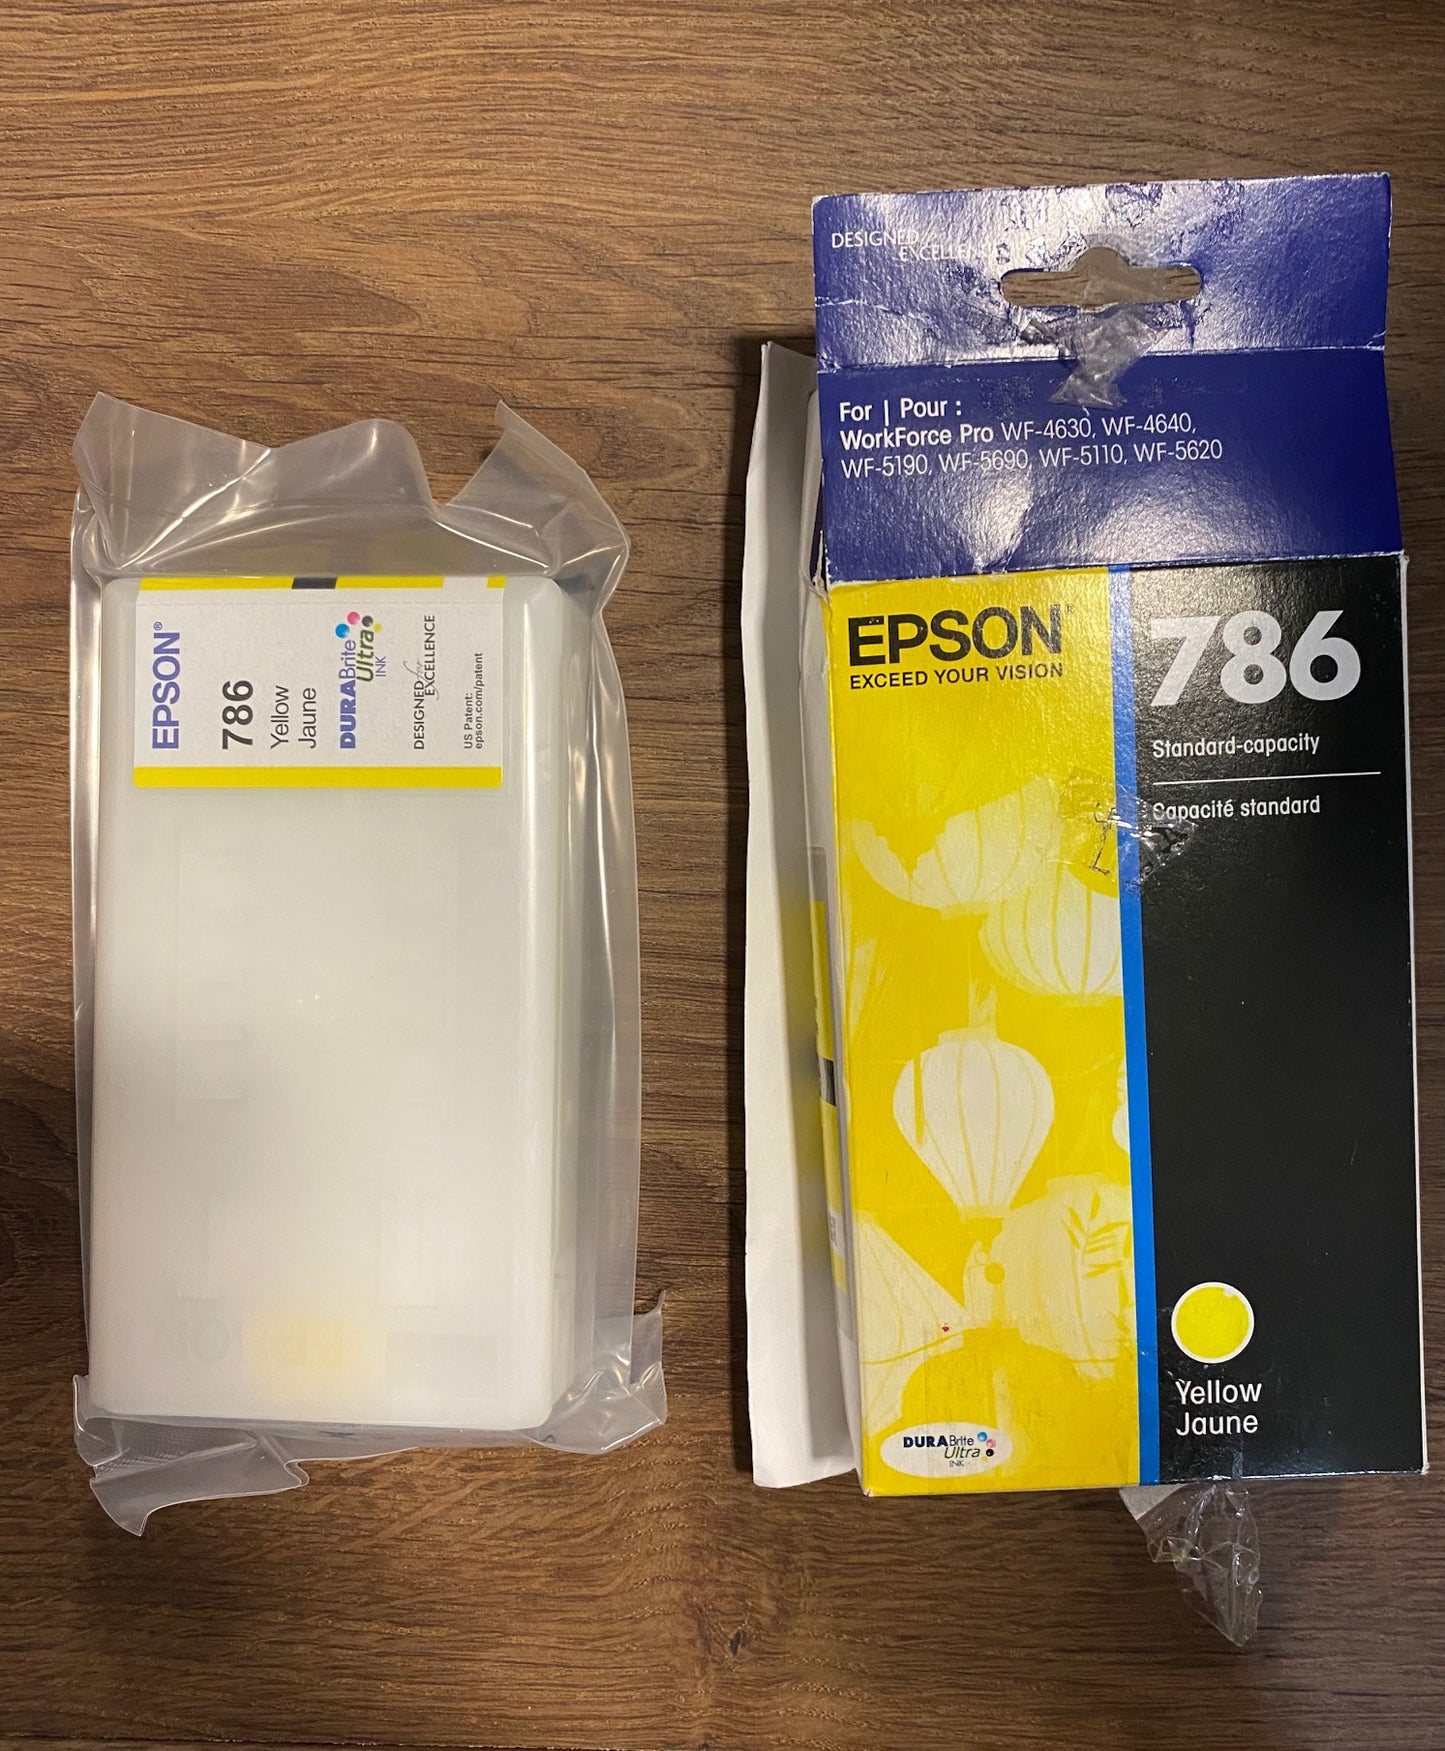 Epson 786 DURABrite Ultra Standard Capacity Ink Cartridge, Yellow